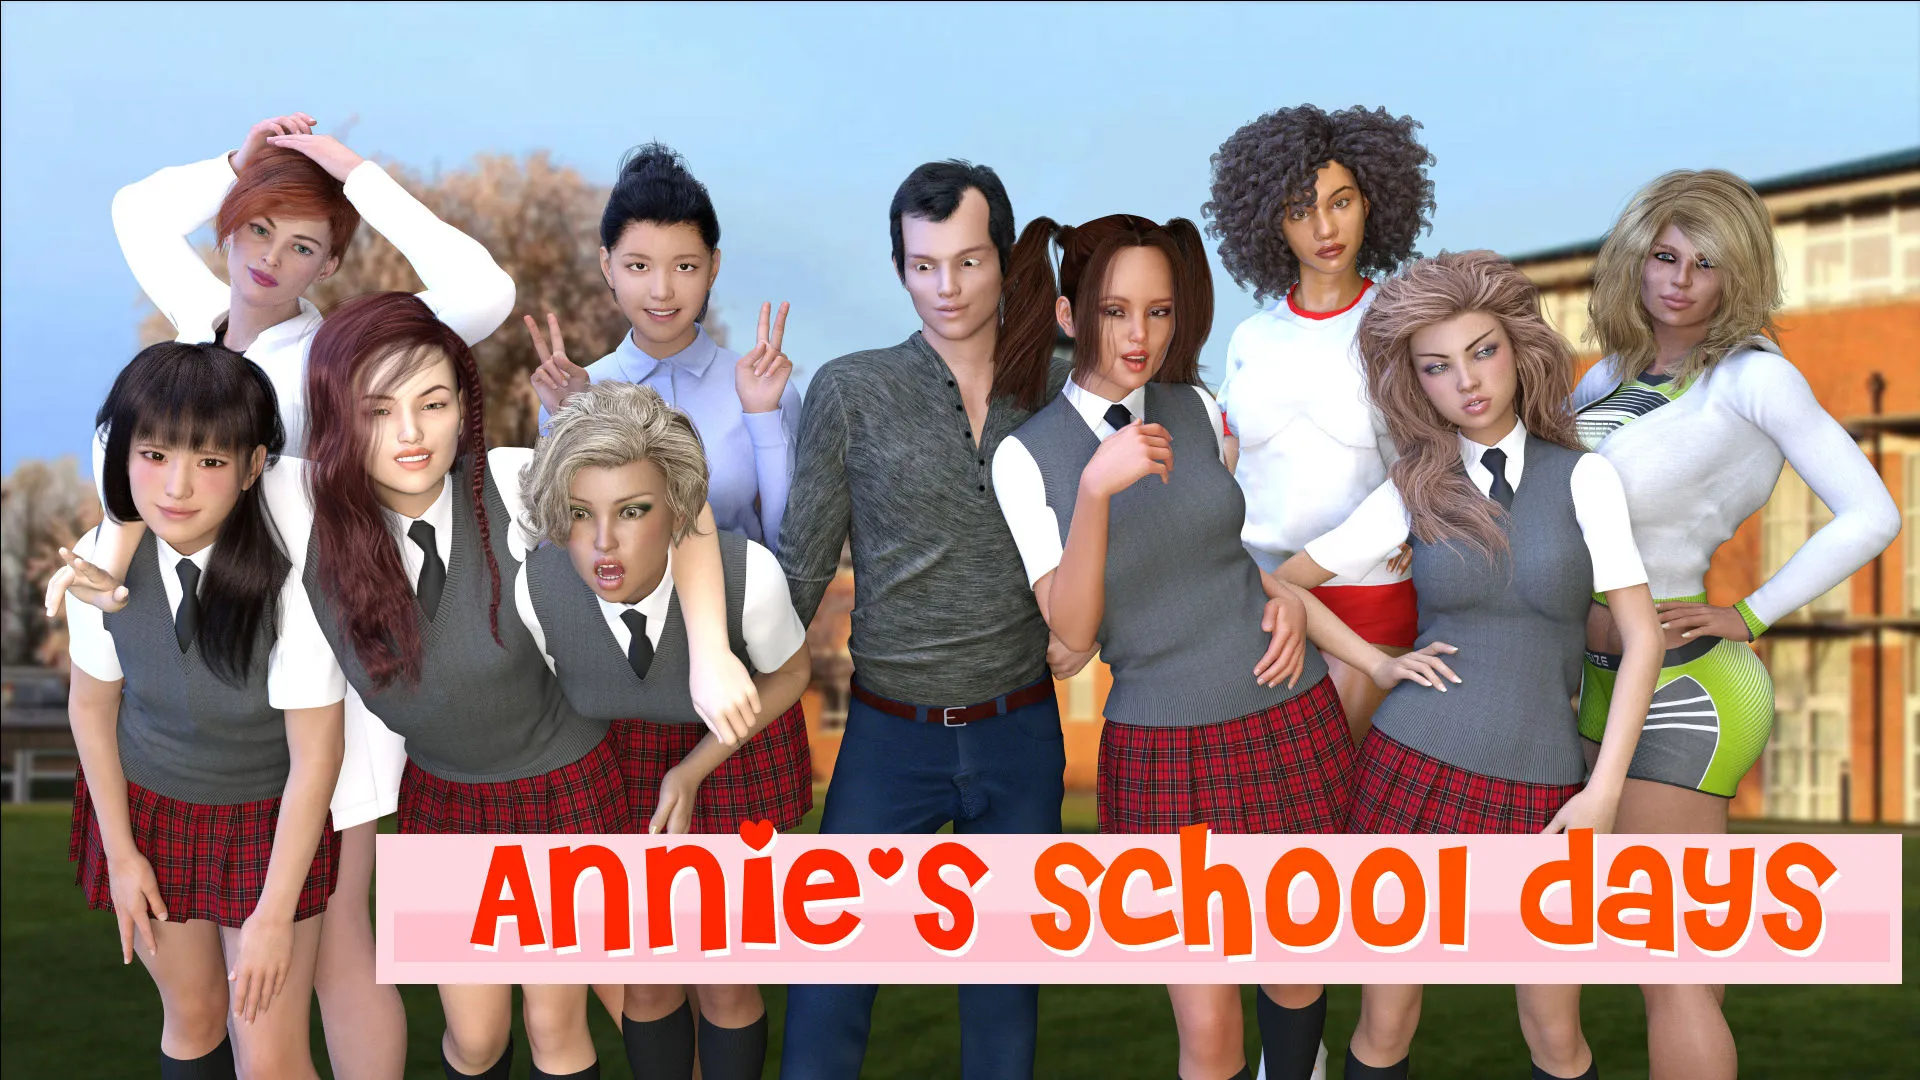 Annie's School Days [v0.7] main image